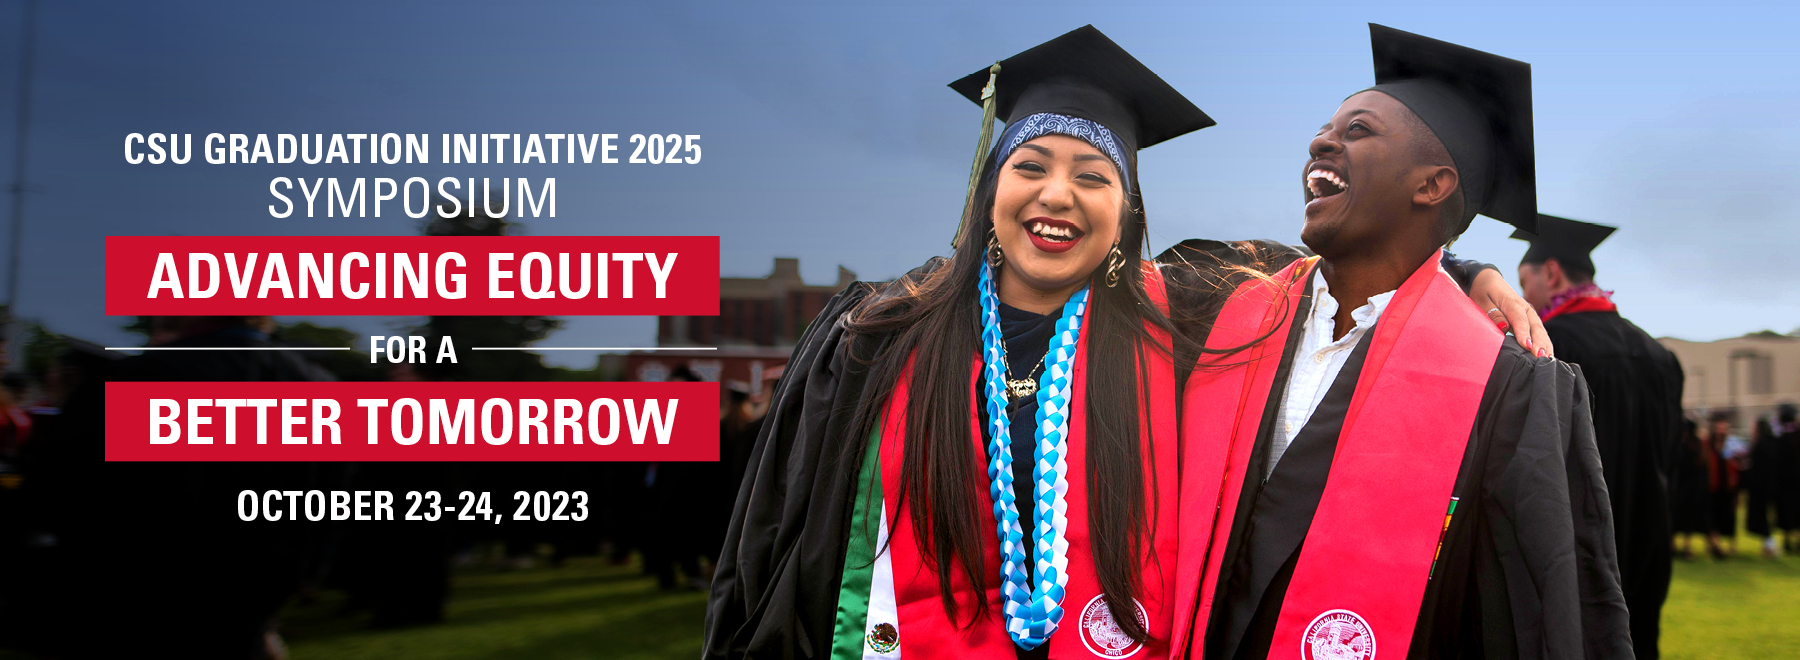 CSU Graduation Initiative 2025 Symposium: Advancing Equity for a Better Tomorrow. October 23-24, 2023